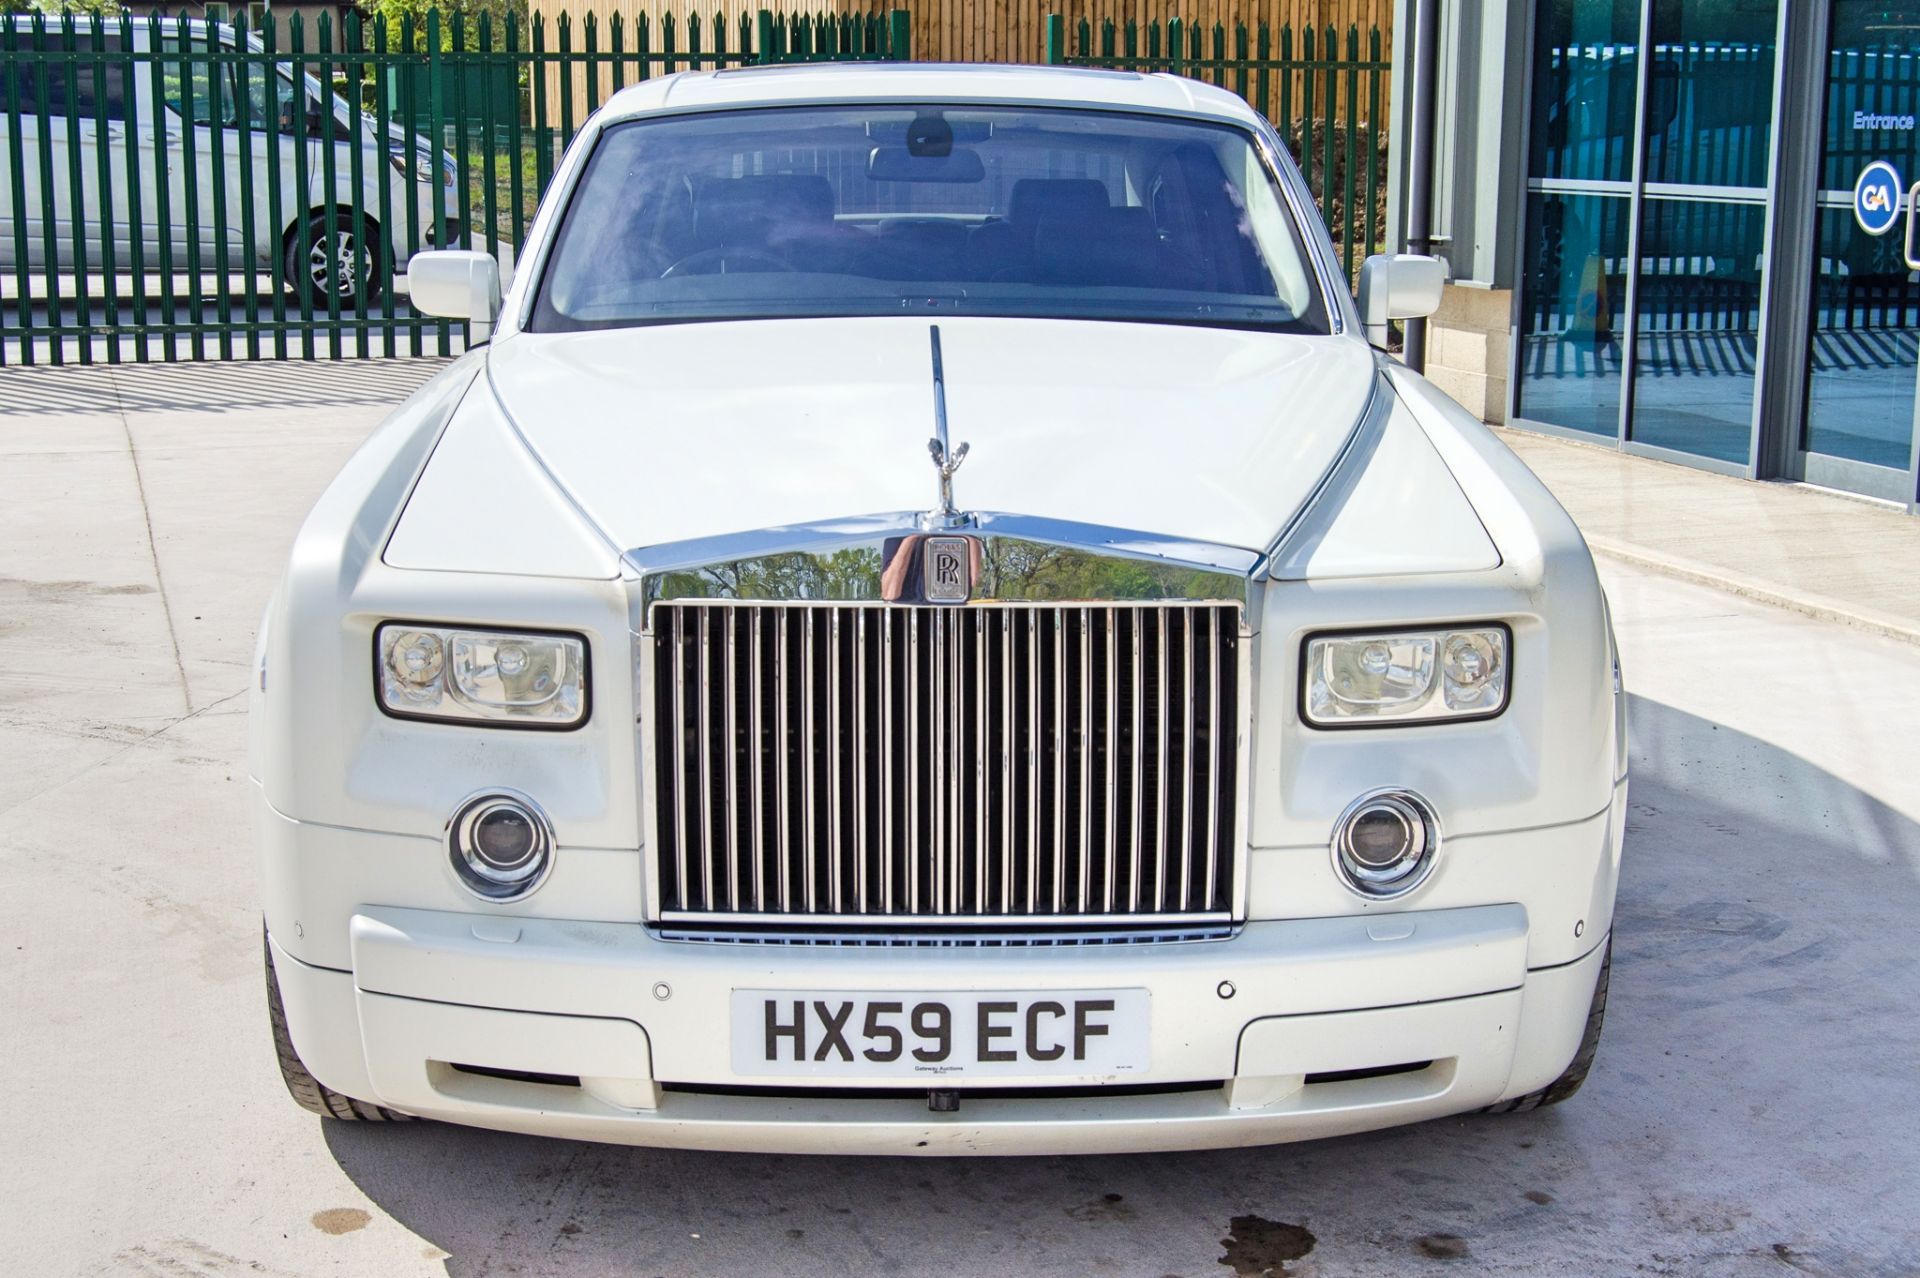 2009 Rolls Royce Phantom 6749cc V12 Auto 4 door saloon car - Image 10 of 54